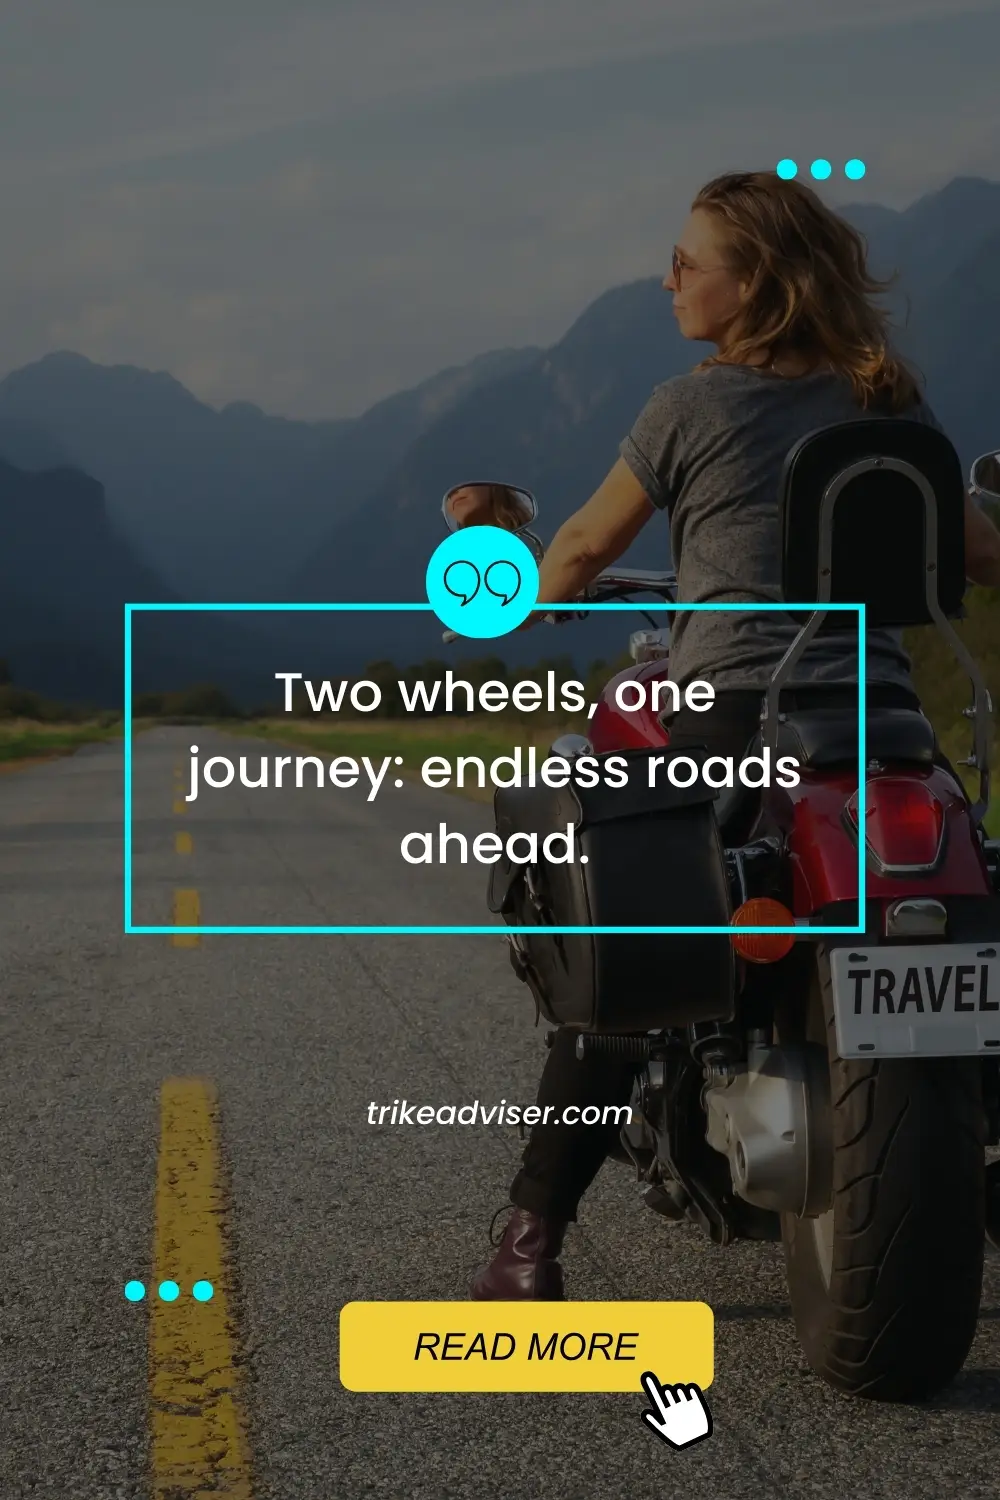 "Two wheels, one journey: endless roads ahead."